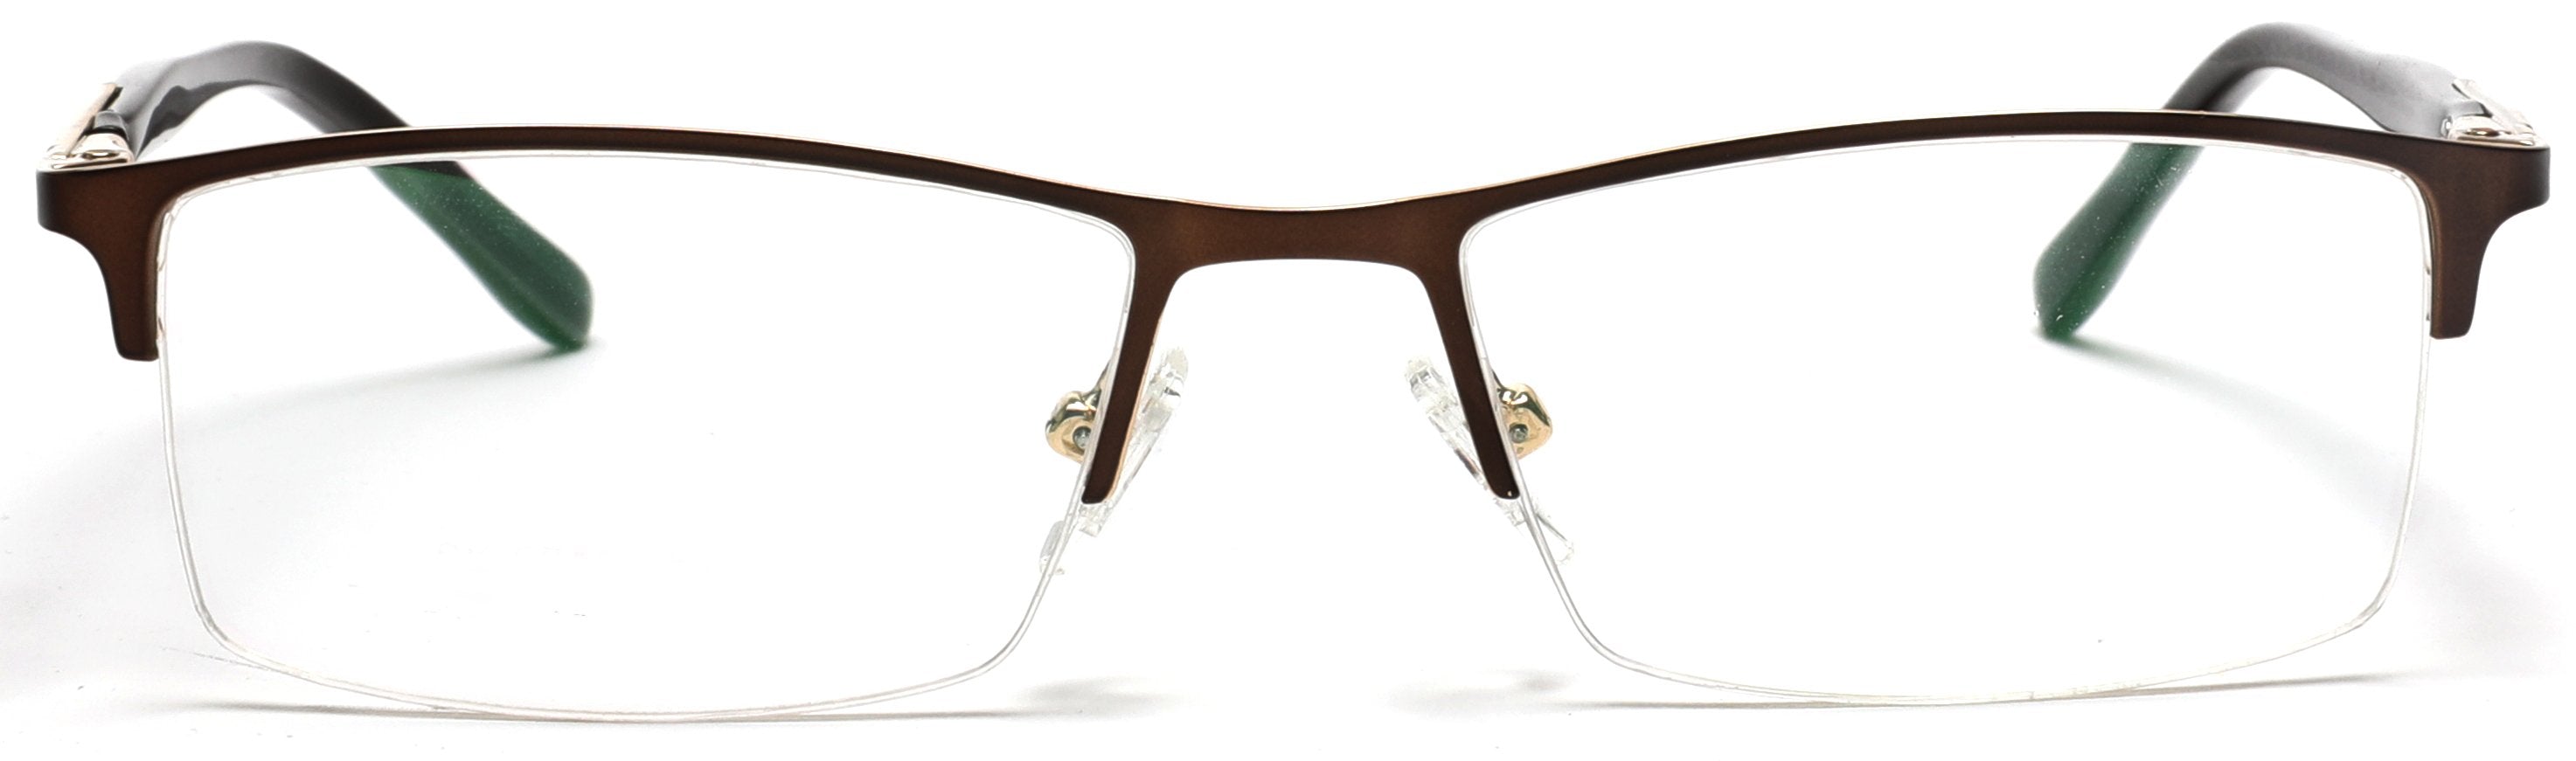 Tango Optics Rectangle Metal Eyeglasses Frame Luxe RX Stainless Steel Jocelyn Bell Brown Rectangle For Prescription Lens-Samba Shades